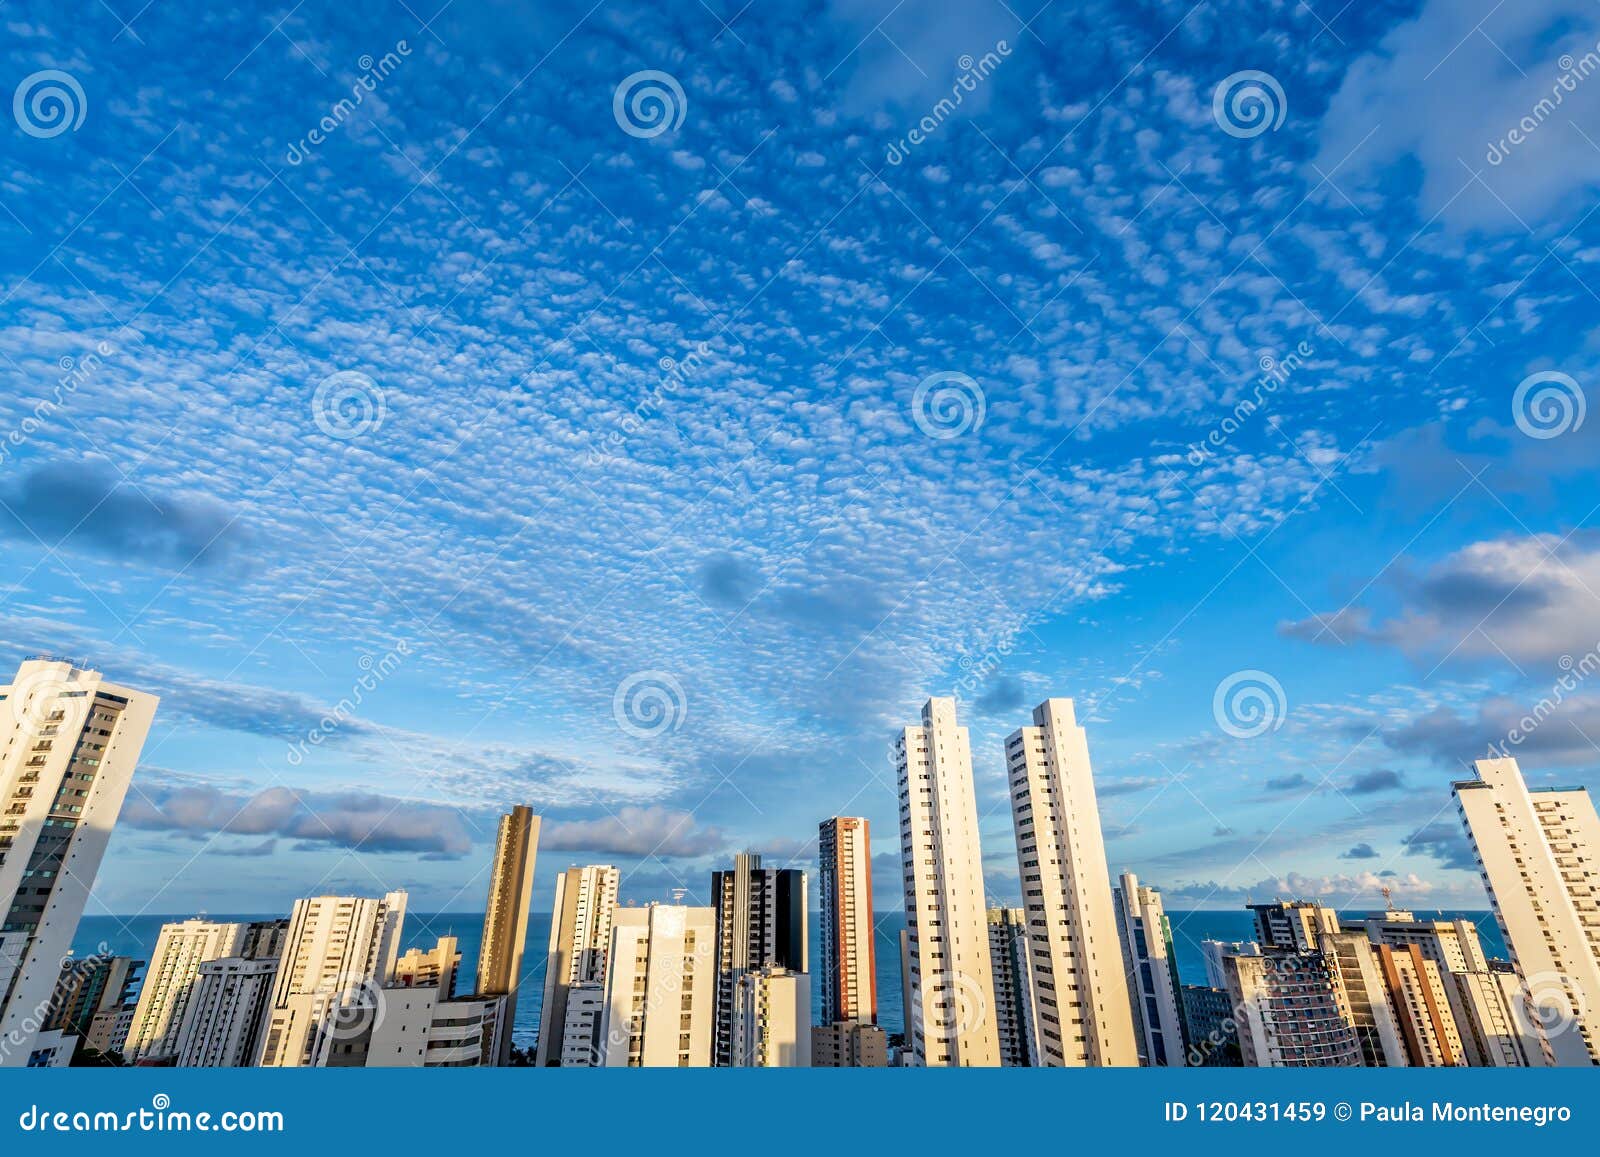 skyline buildings in a blue sky day at boa viagem beach, recife, pernambuco, brazil